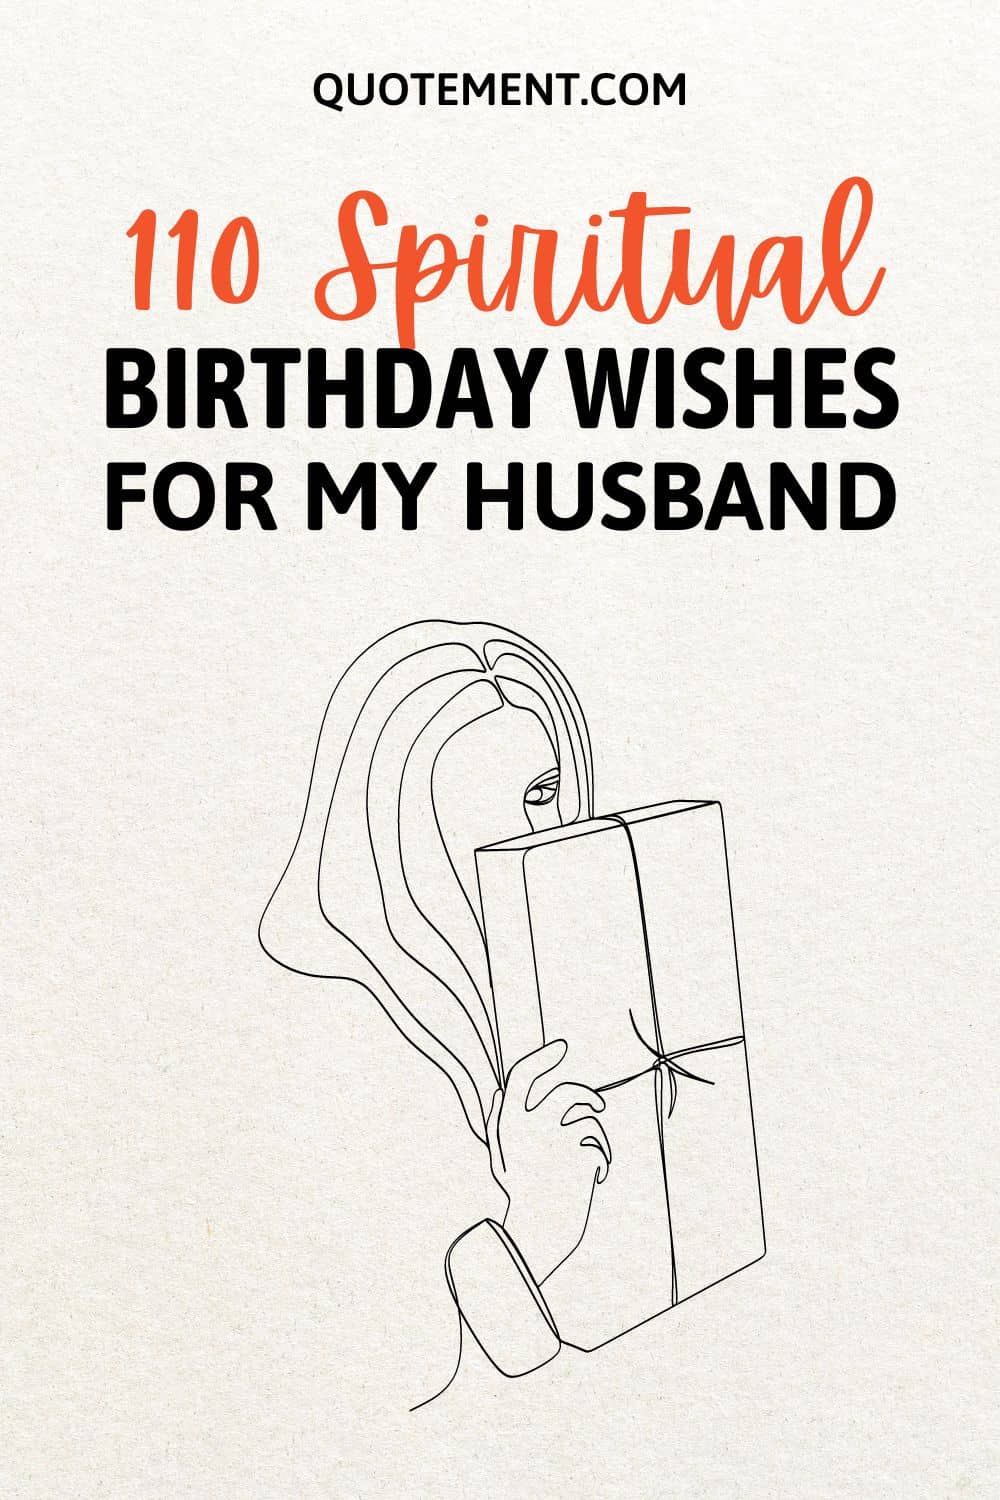 110 Spiritual Birthday Wishes For My Husband's Big Day
